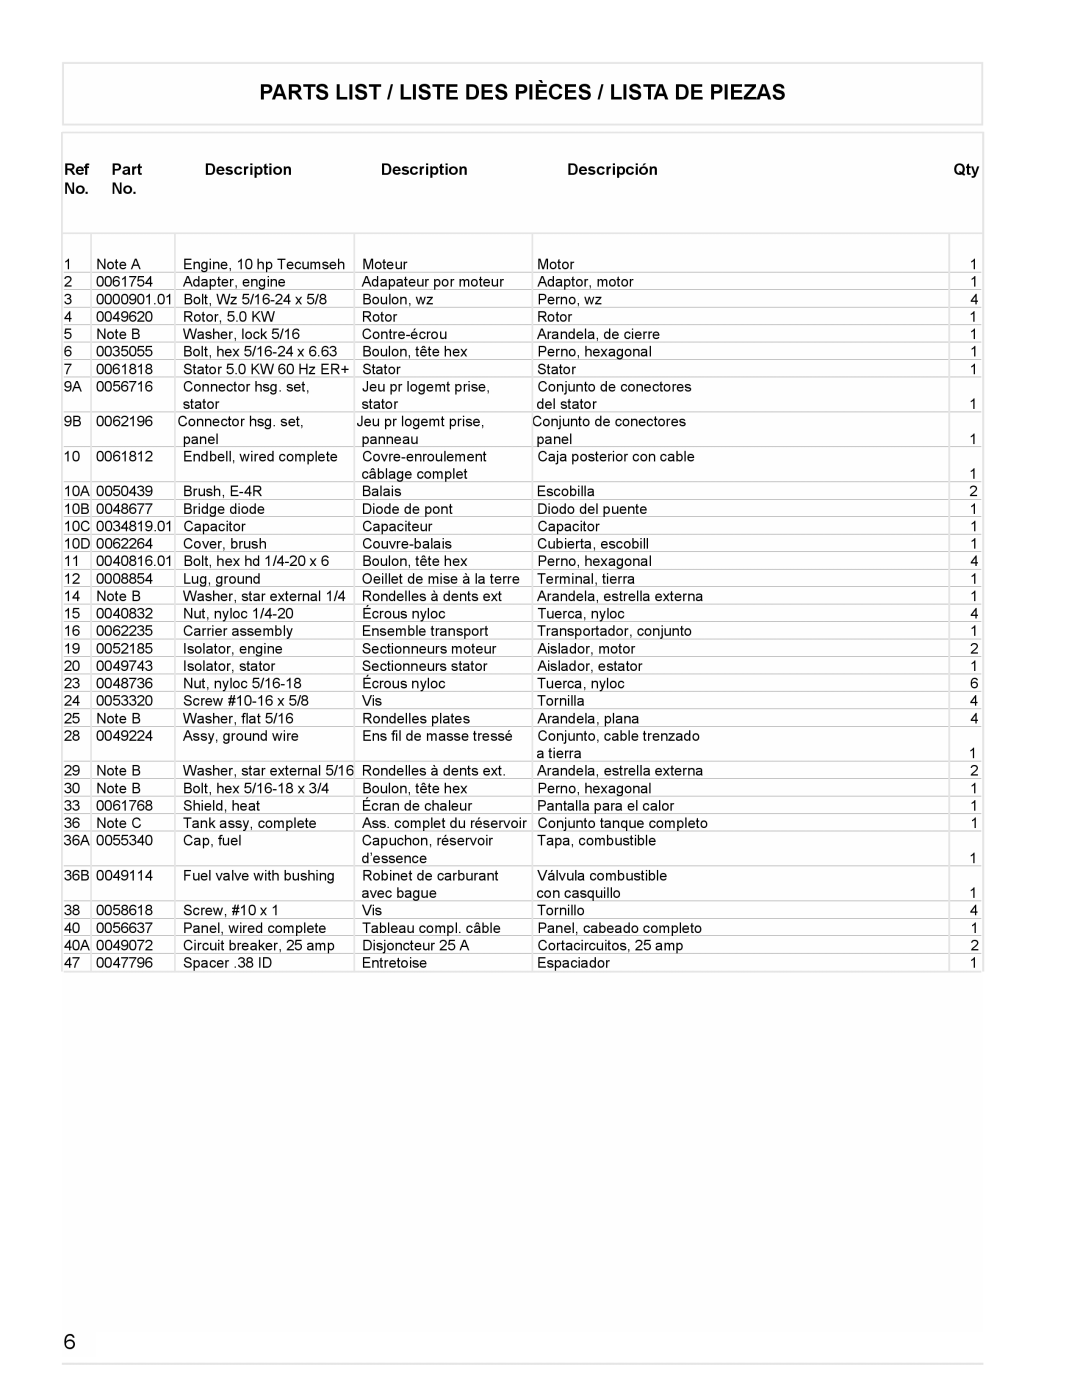 Coleman PM0525302.18 manual Parts List / Liste Des Pièces / Lista De Piezas, Description, Descripción 